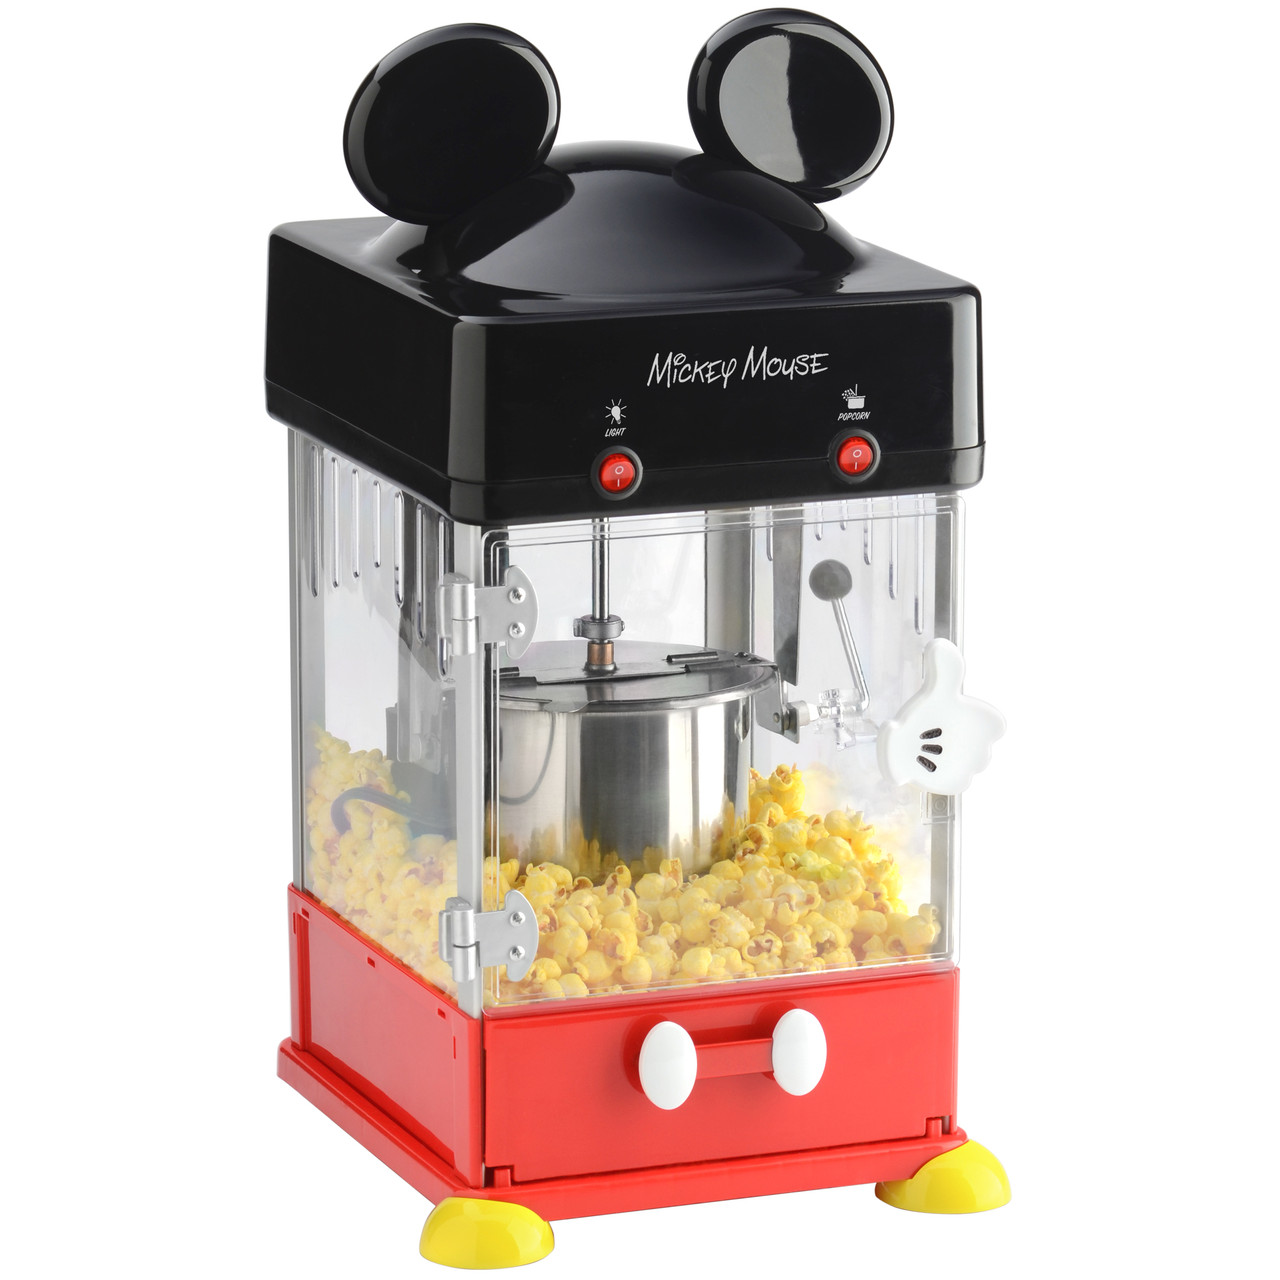 Toastmaster Mini Popcorn Popper